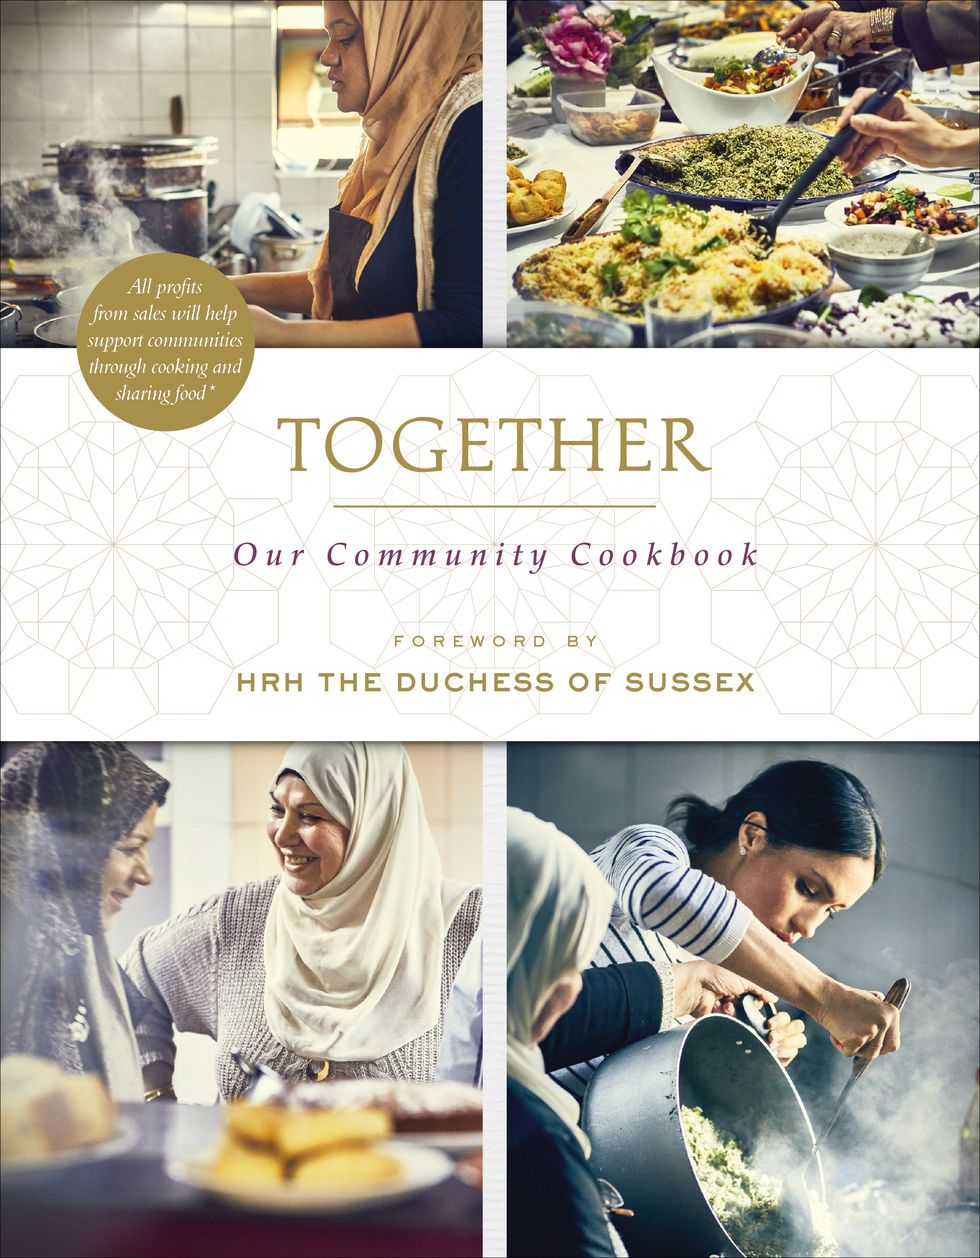 Together. Our Community Cookbook